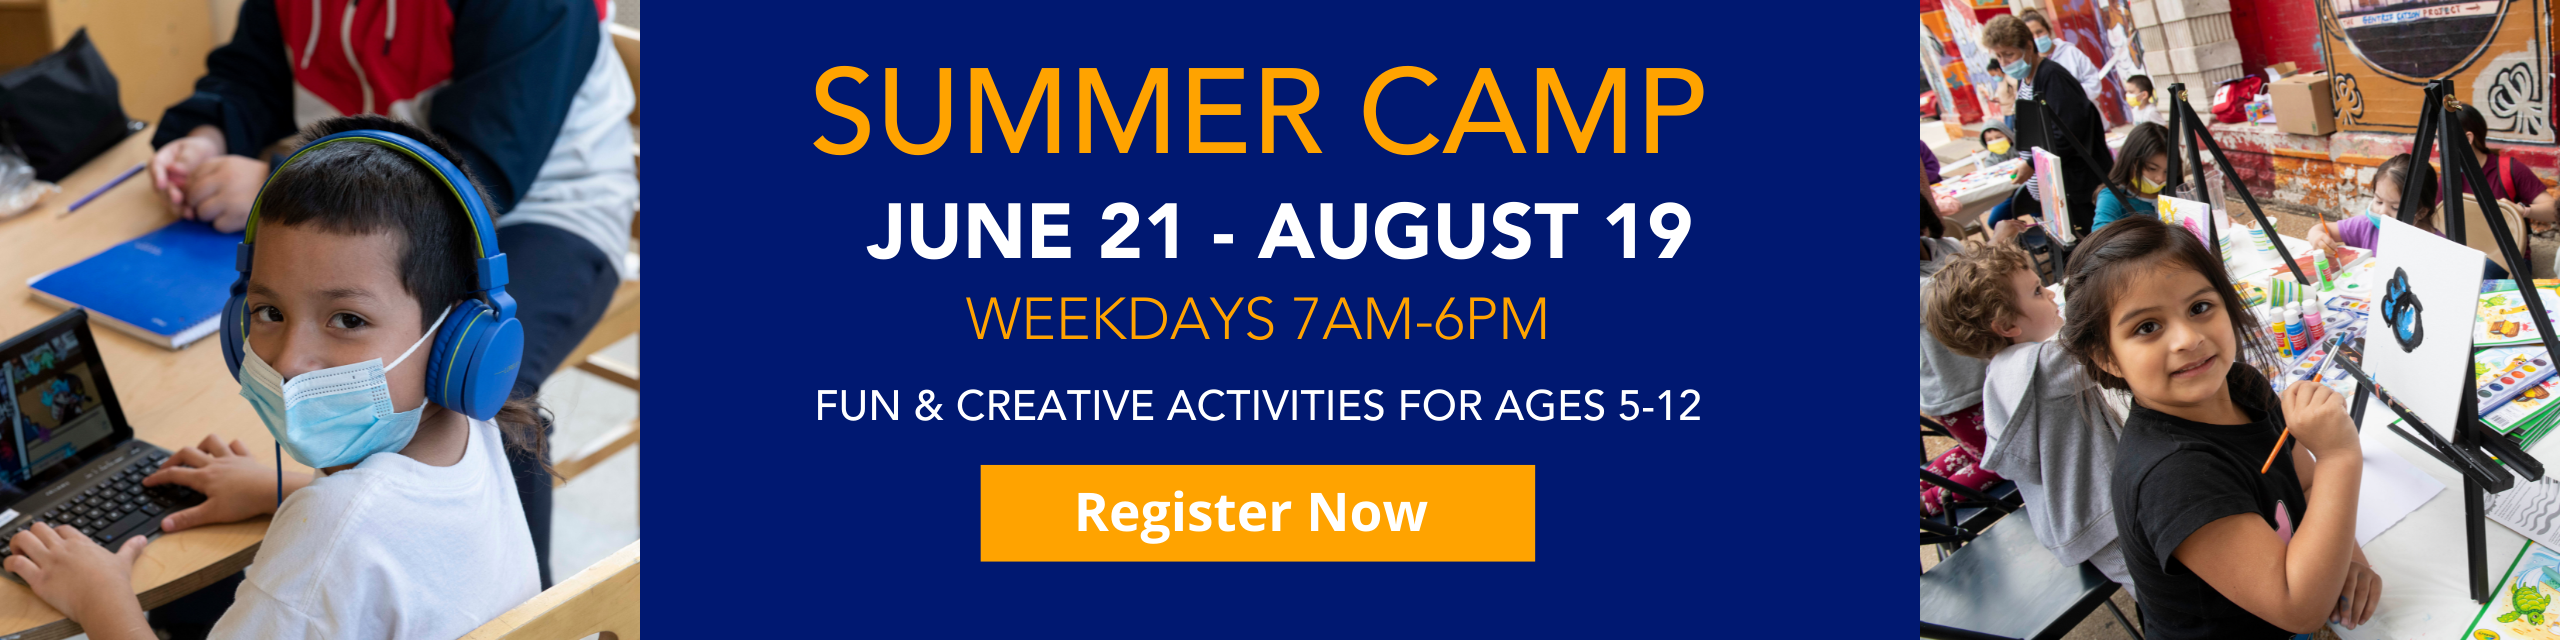 Summer Camp Website Banner